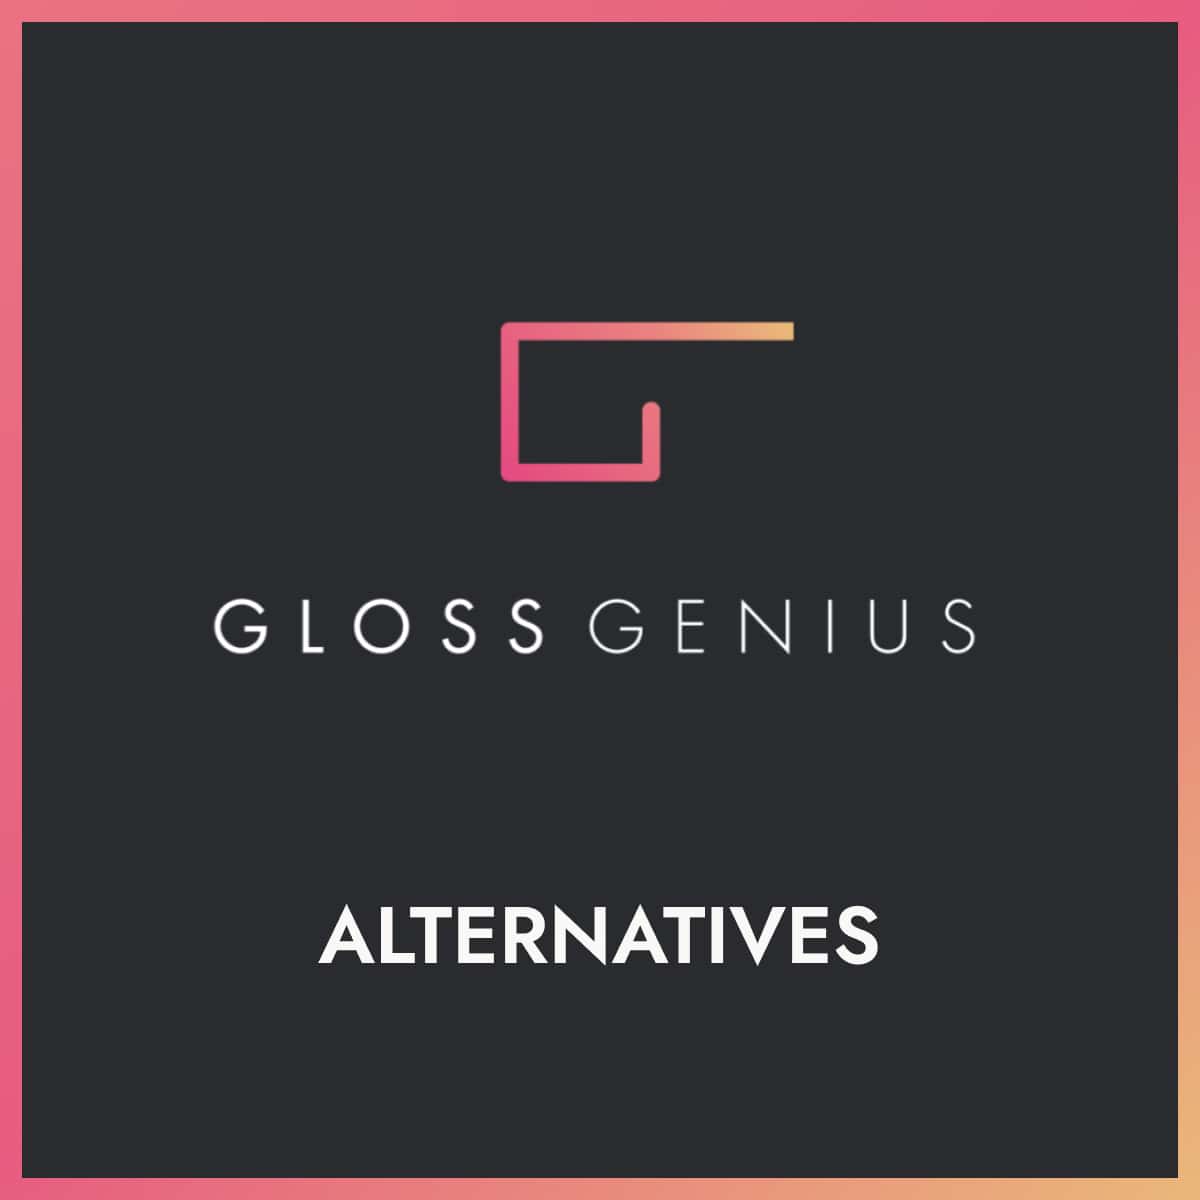 GlossGenius logo above the word "alternatives"